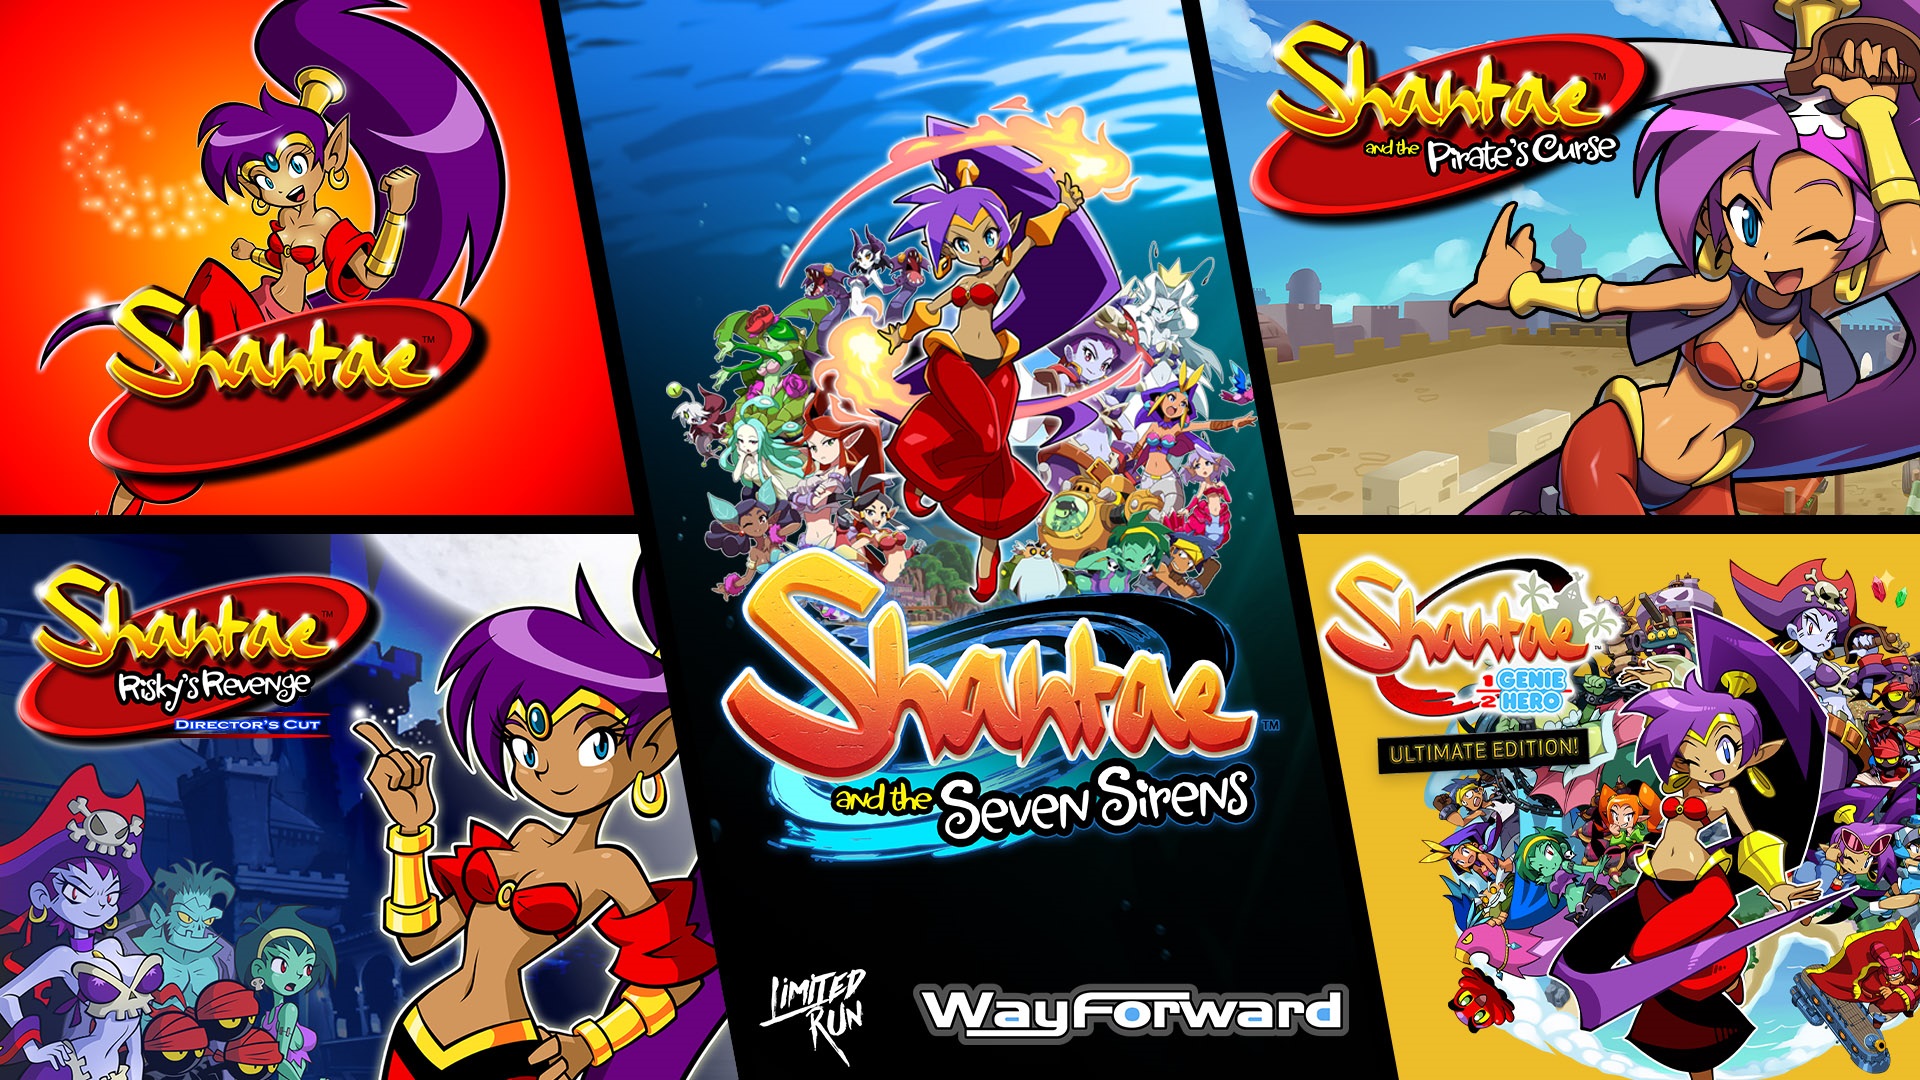 Shantae 1-5 ludi veniunt ad PS5